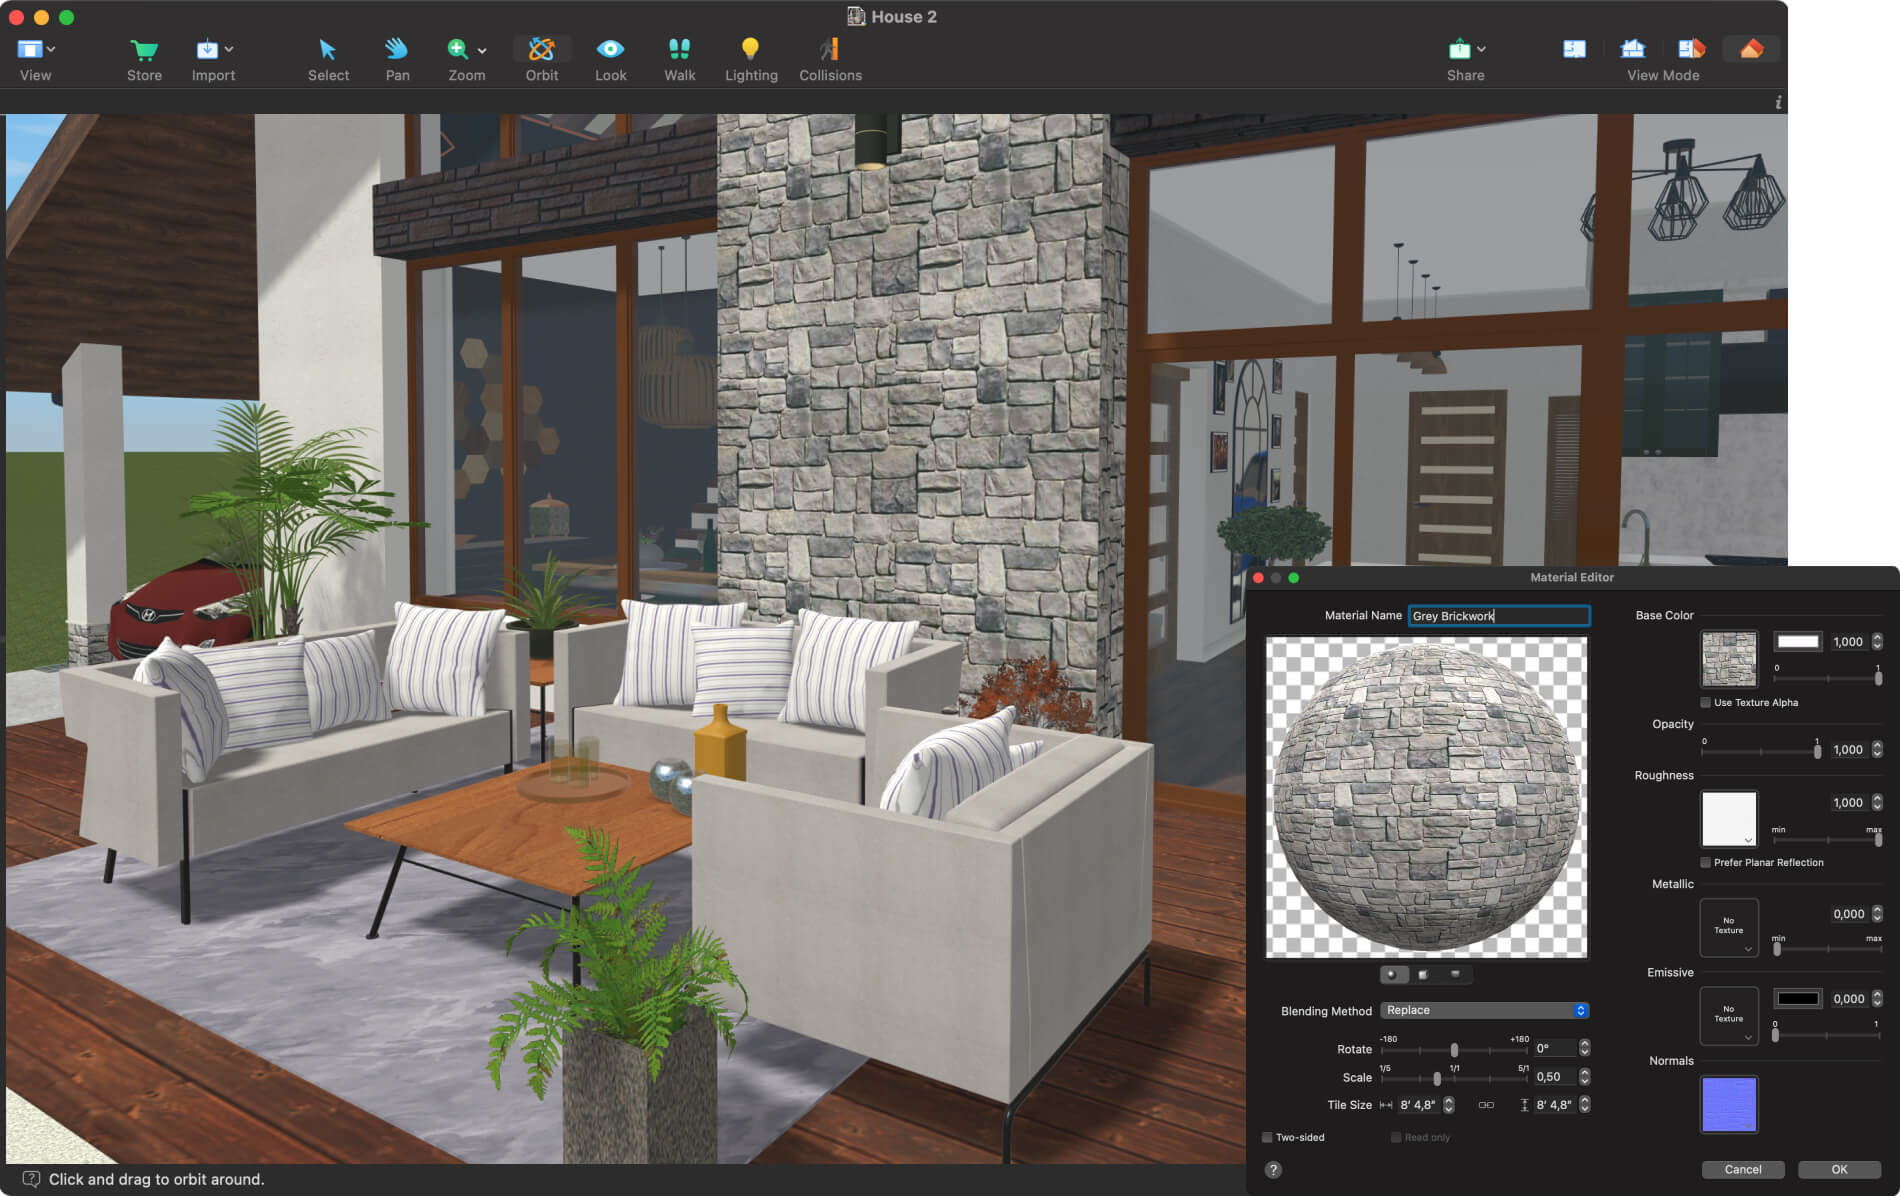 Live Home 3D — Home Design Software for Mac